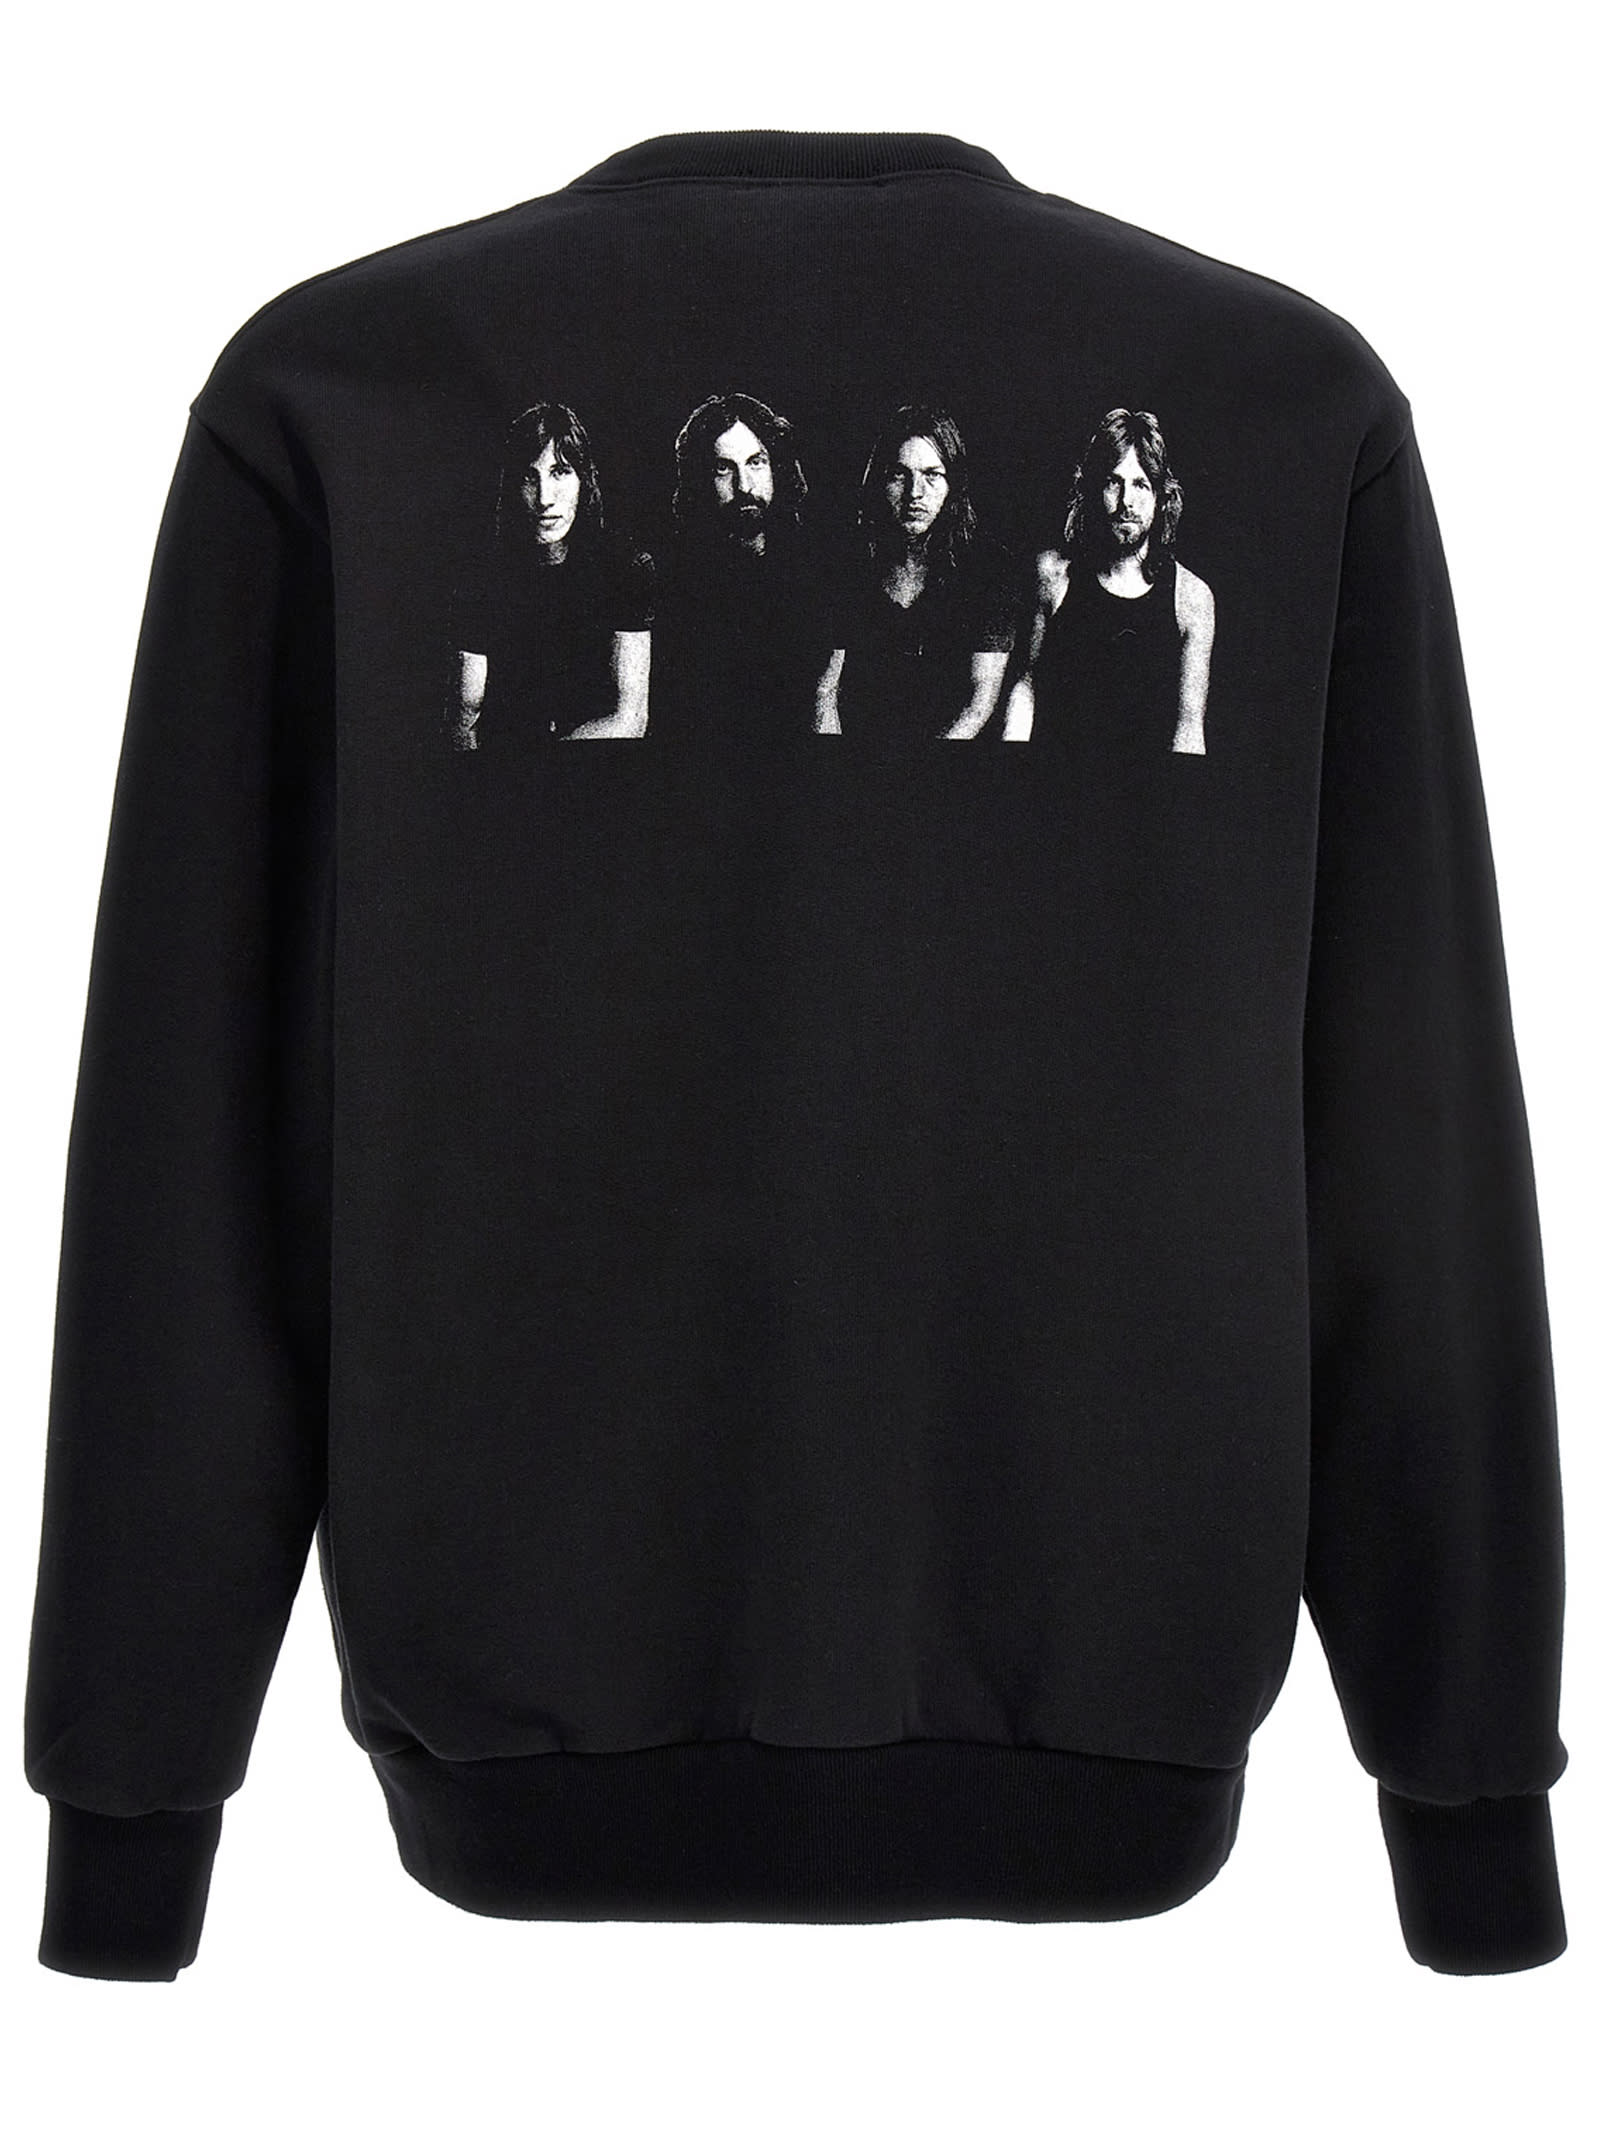 Shop Undercover X Pink Floyd Sweatshirt In White/black